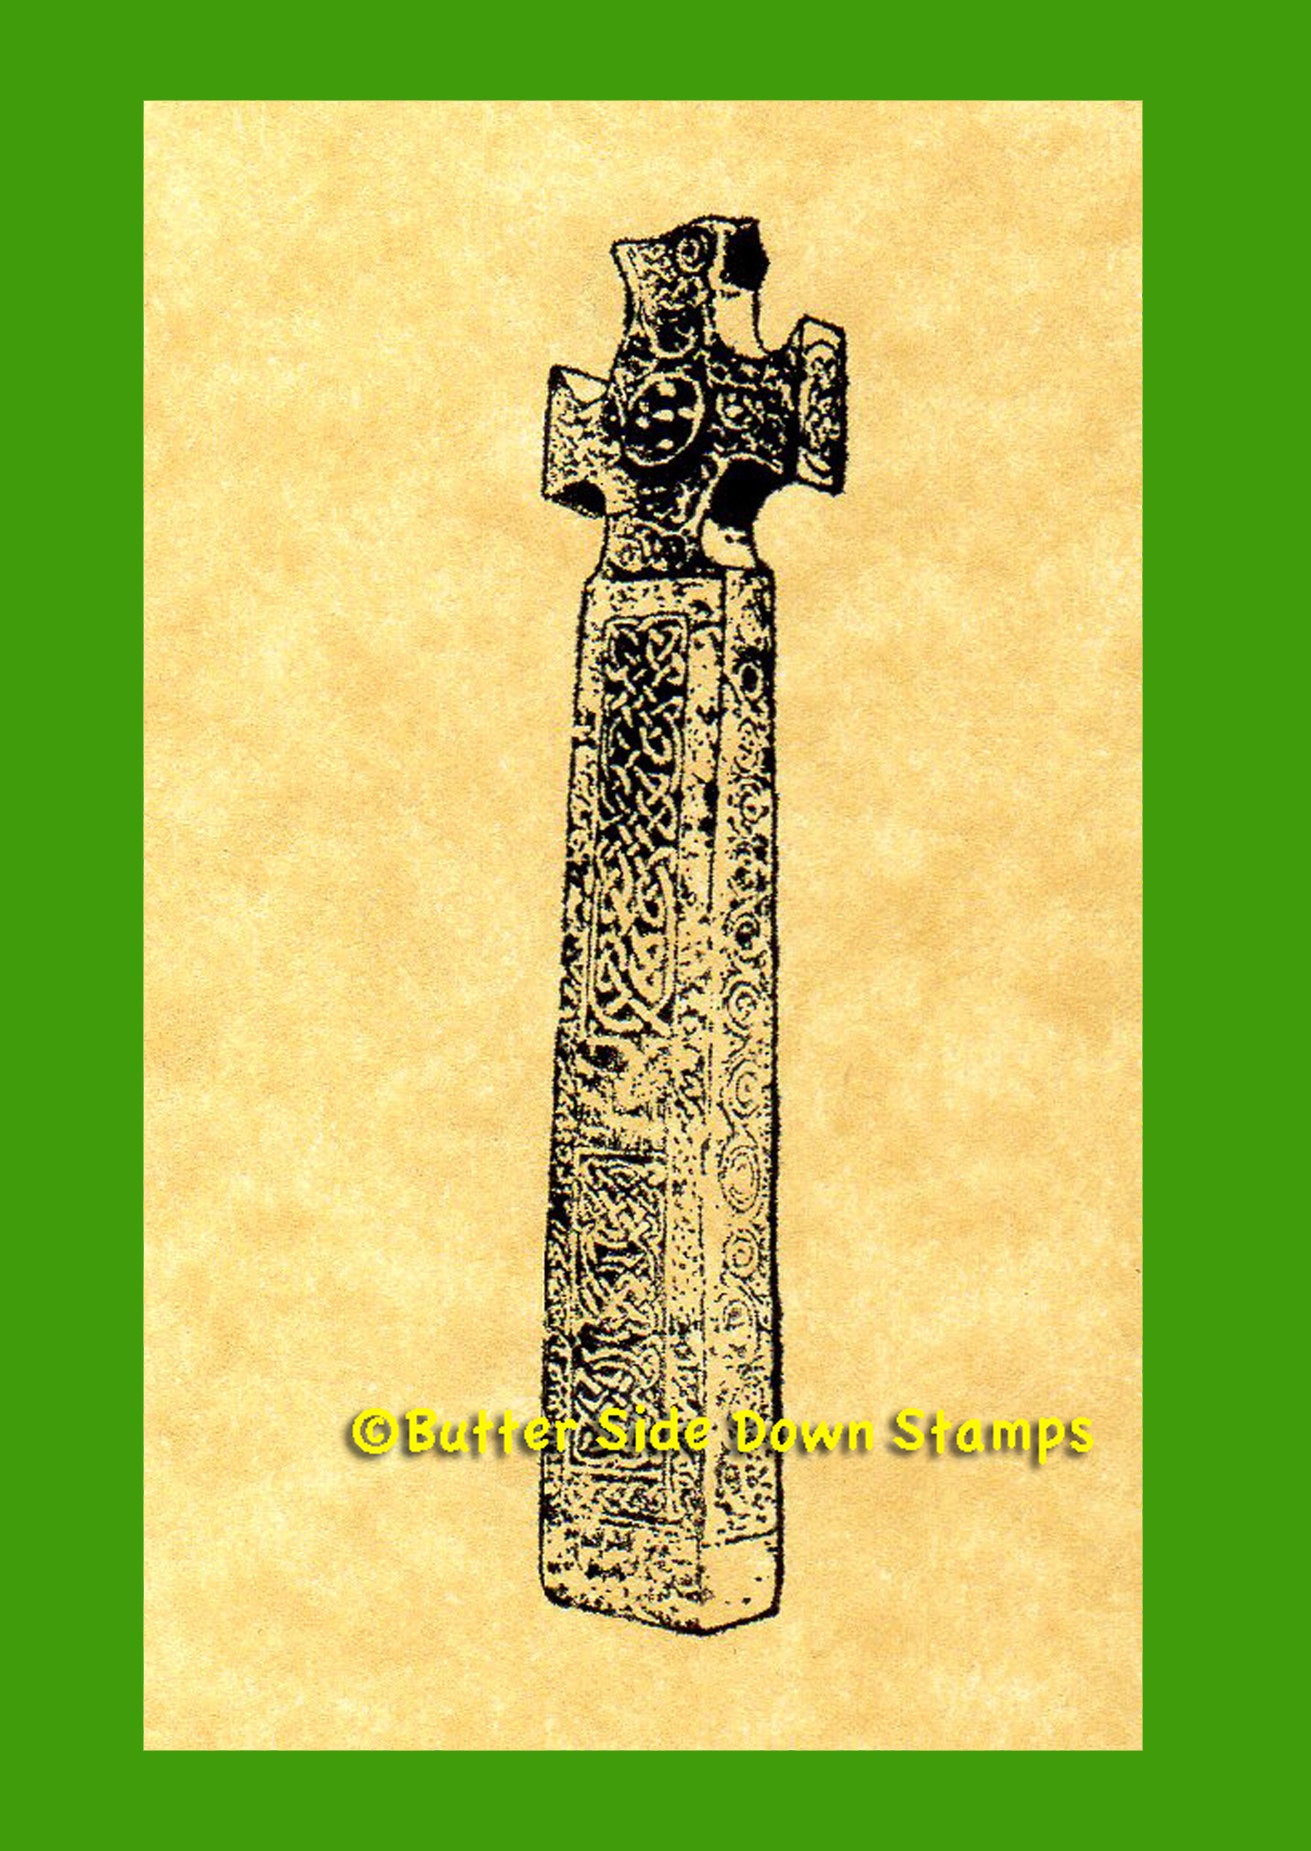 Stone Celtic Cross rubber stamp.